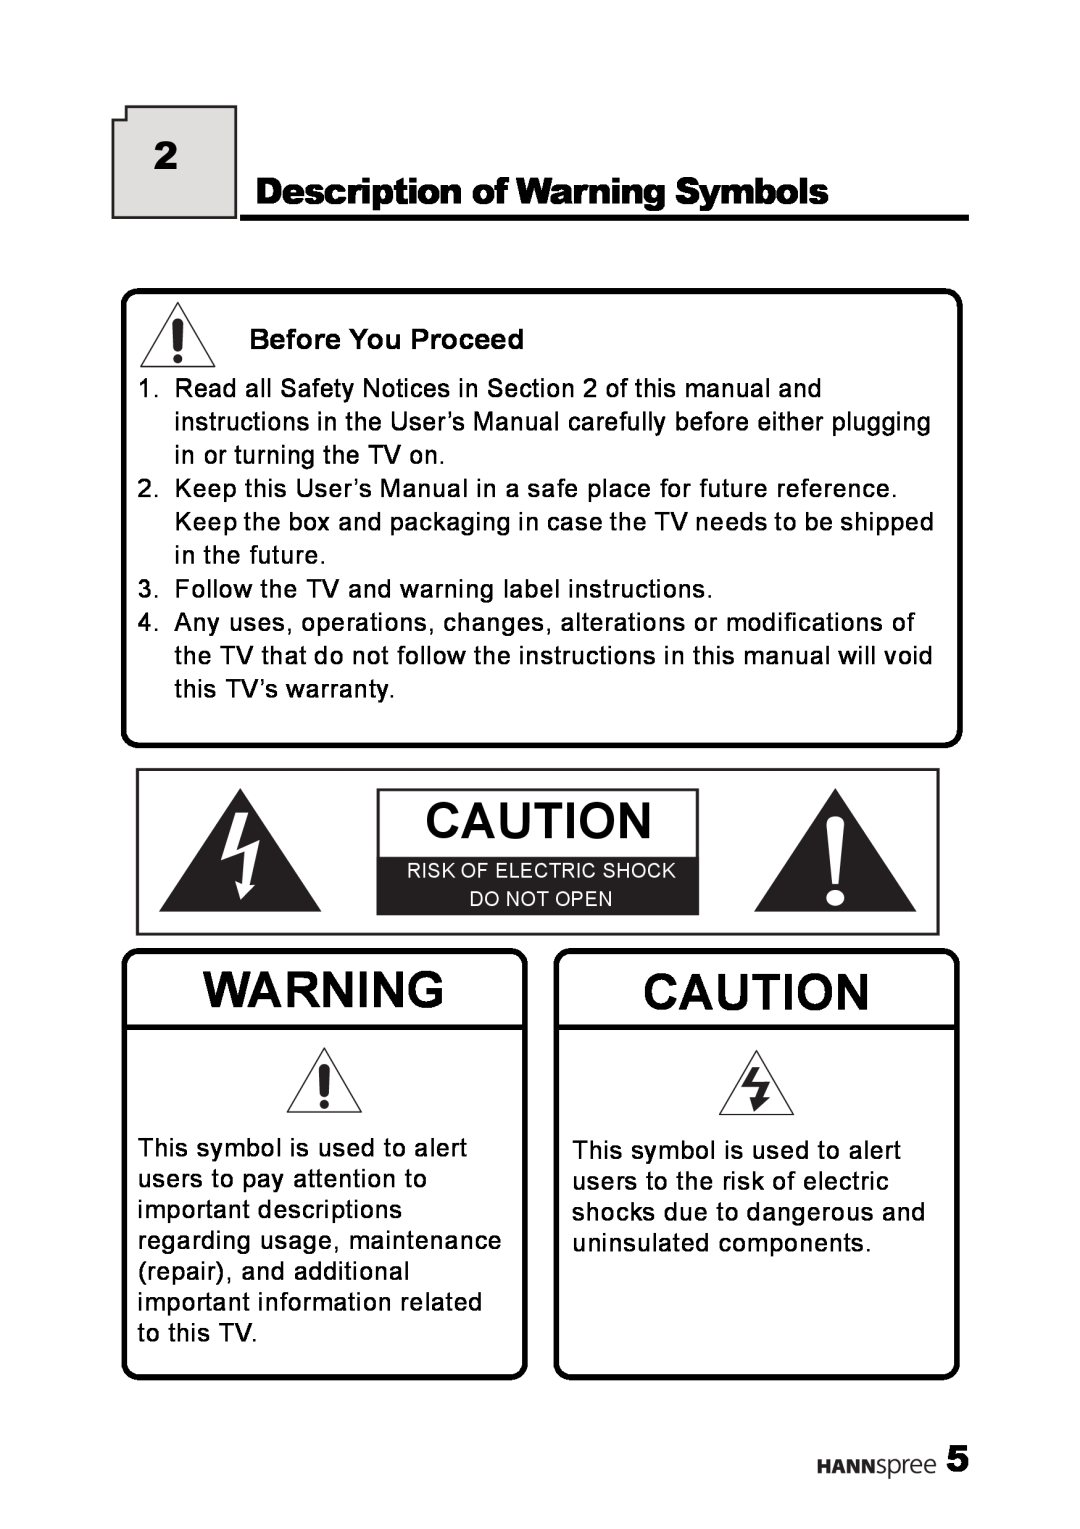 HANNspree LT02-12U1-000 user manual Warning Caution, Description of Warning Symbols, Before You Proceed 